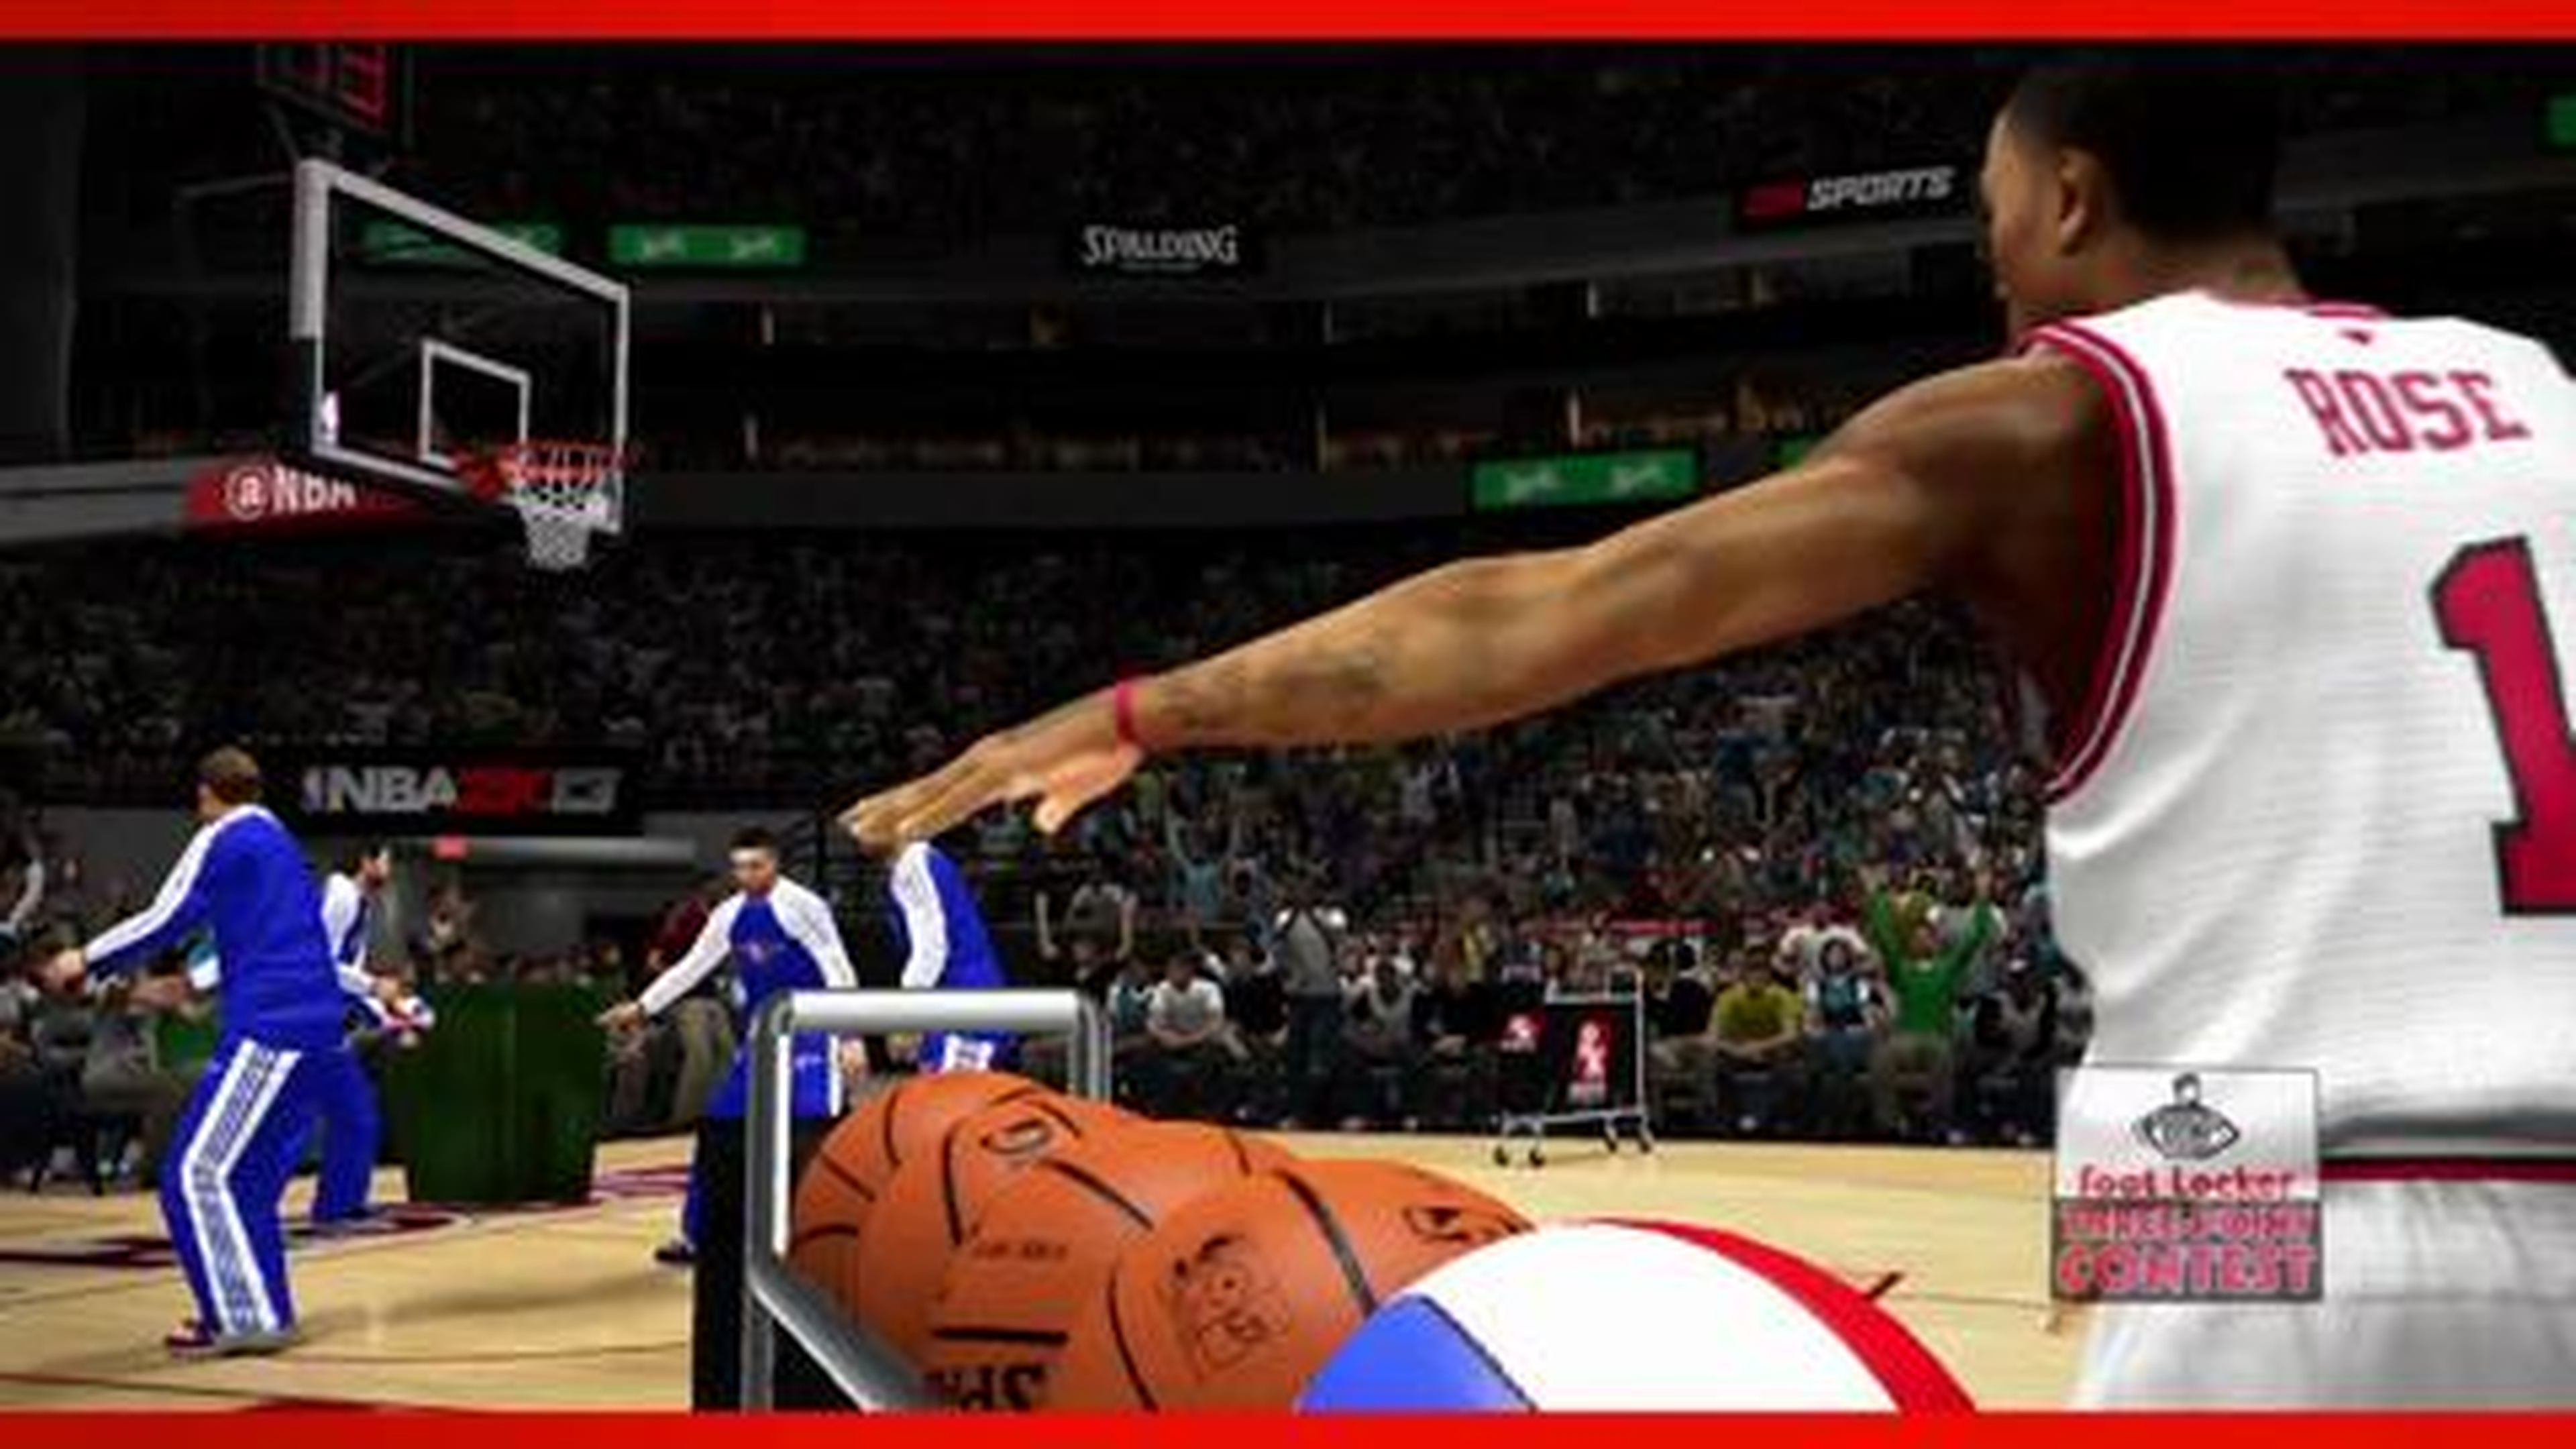 Tráiler del DLC All-Star de NBA 2K13 en Hobbyconsolas.com